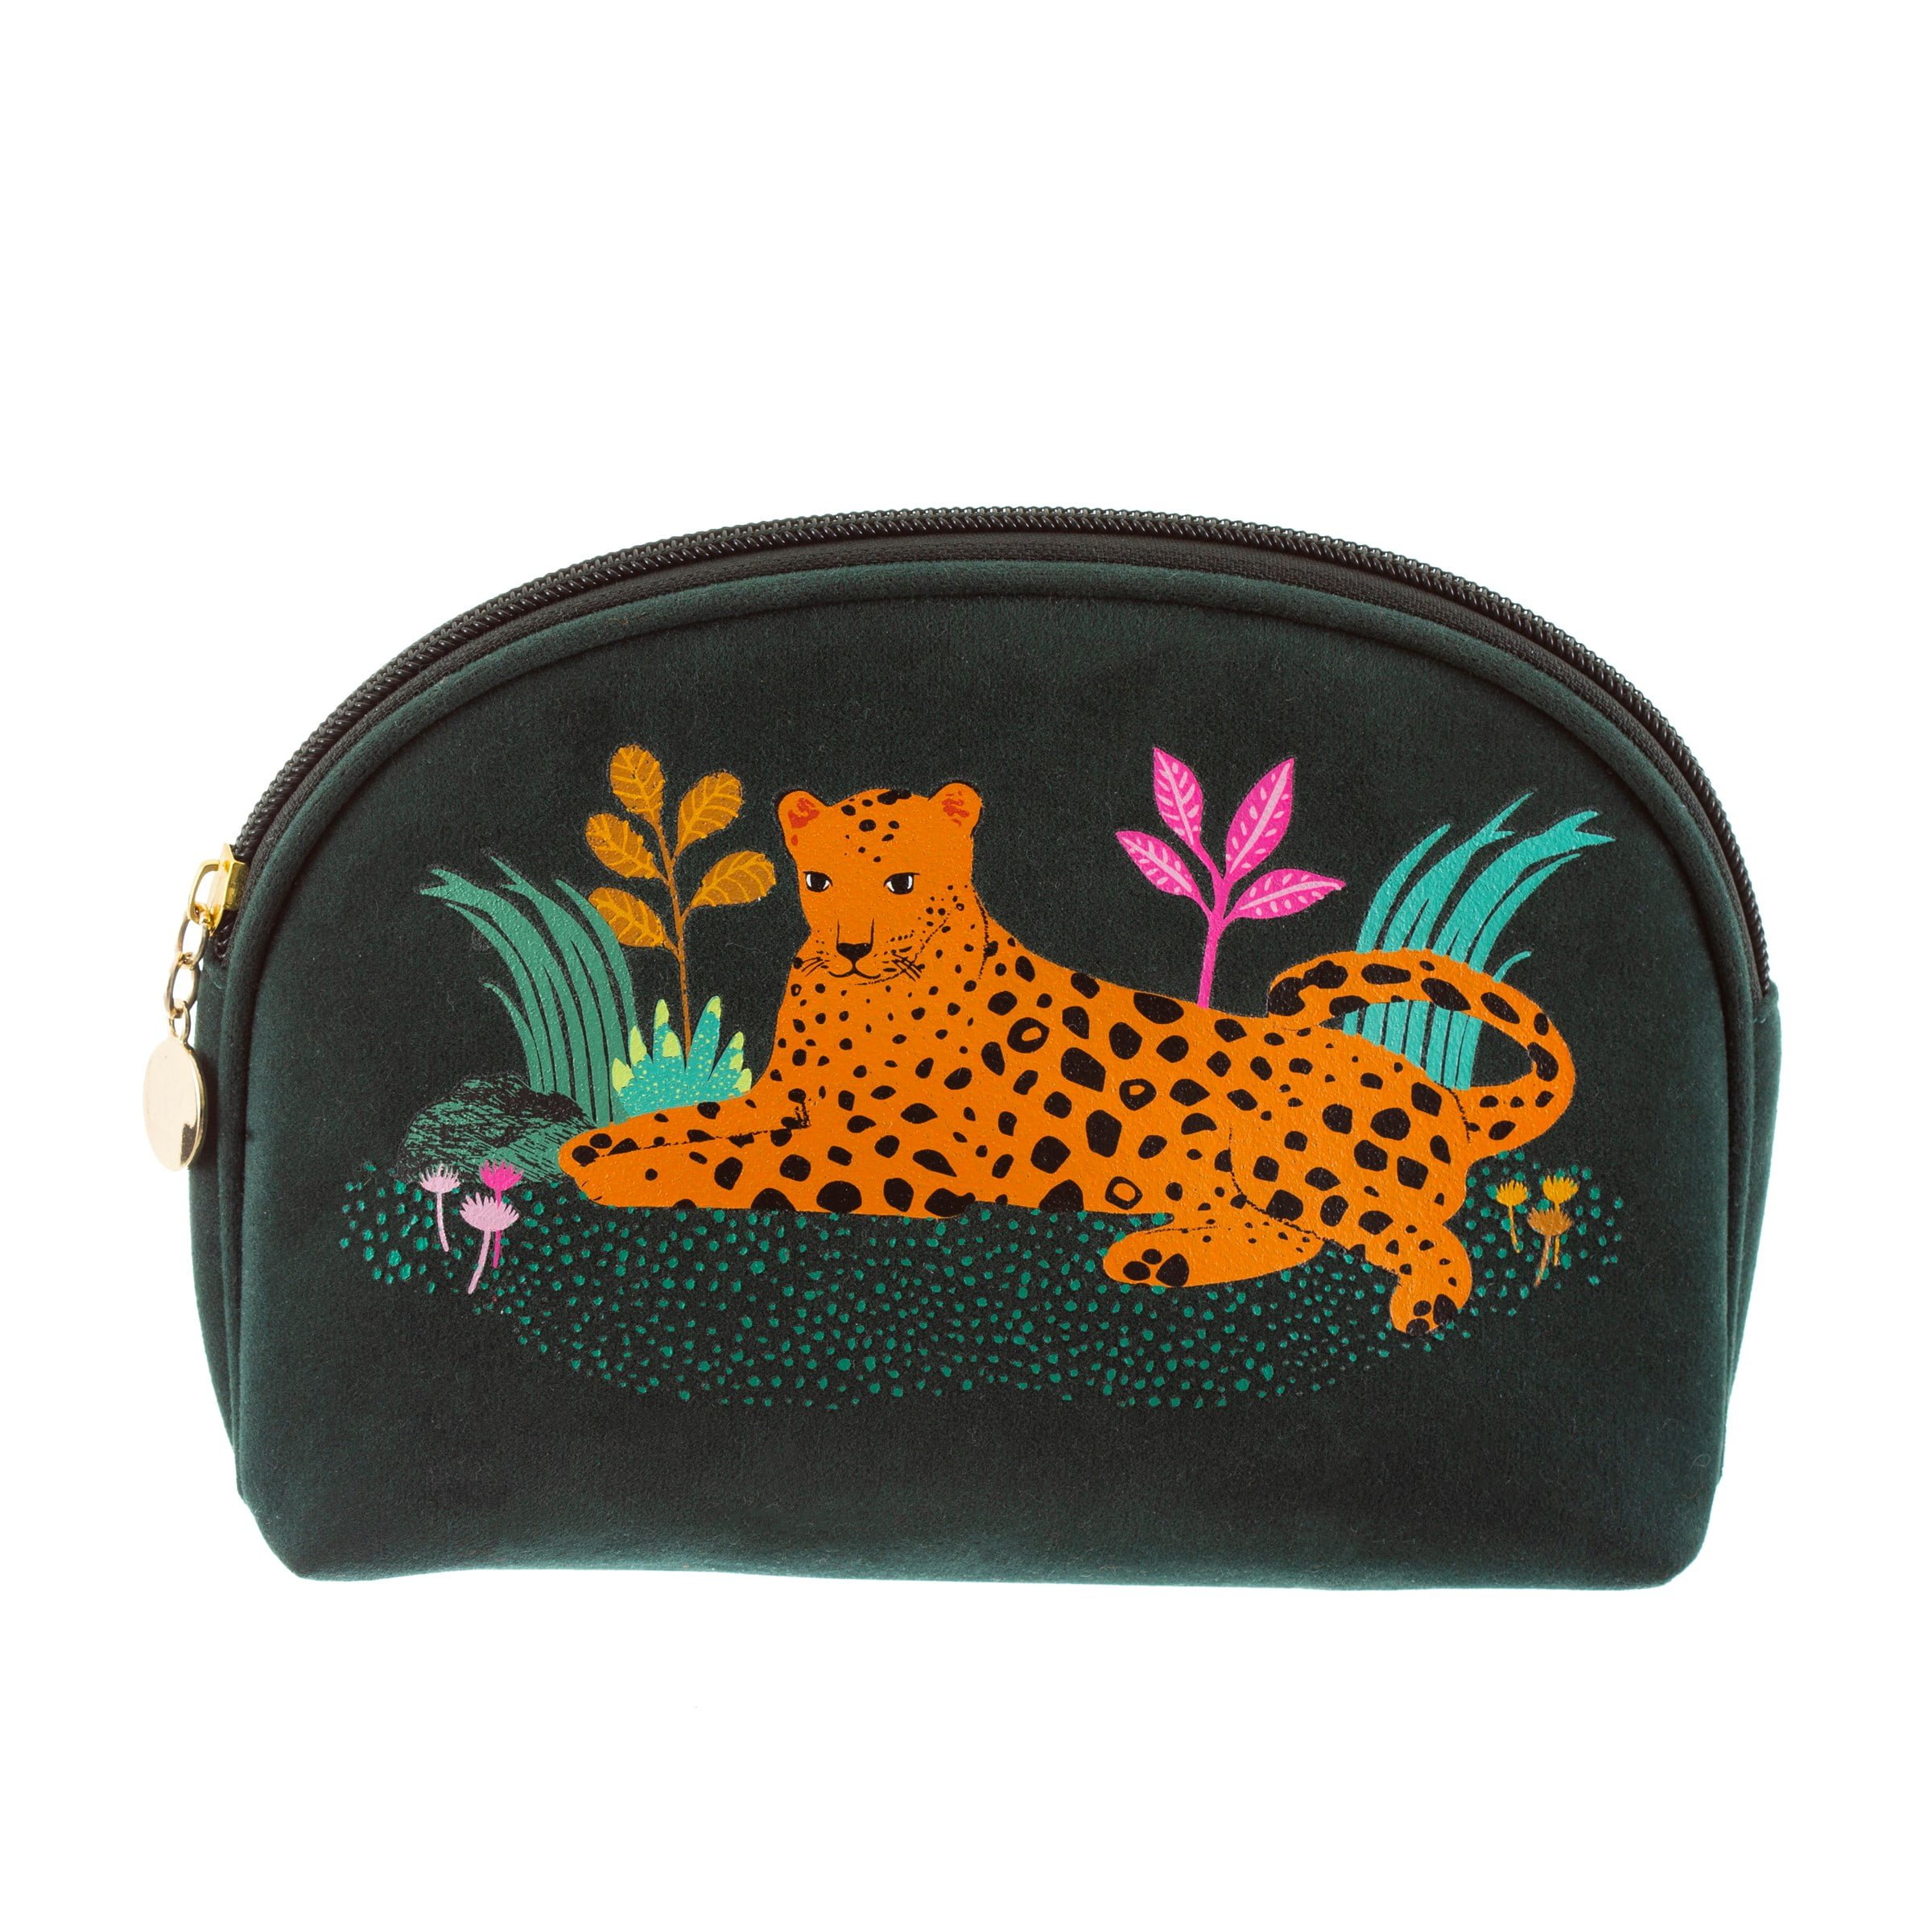 Leopard cosmetic bag.